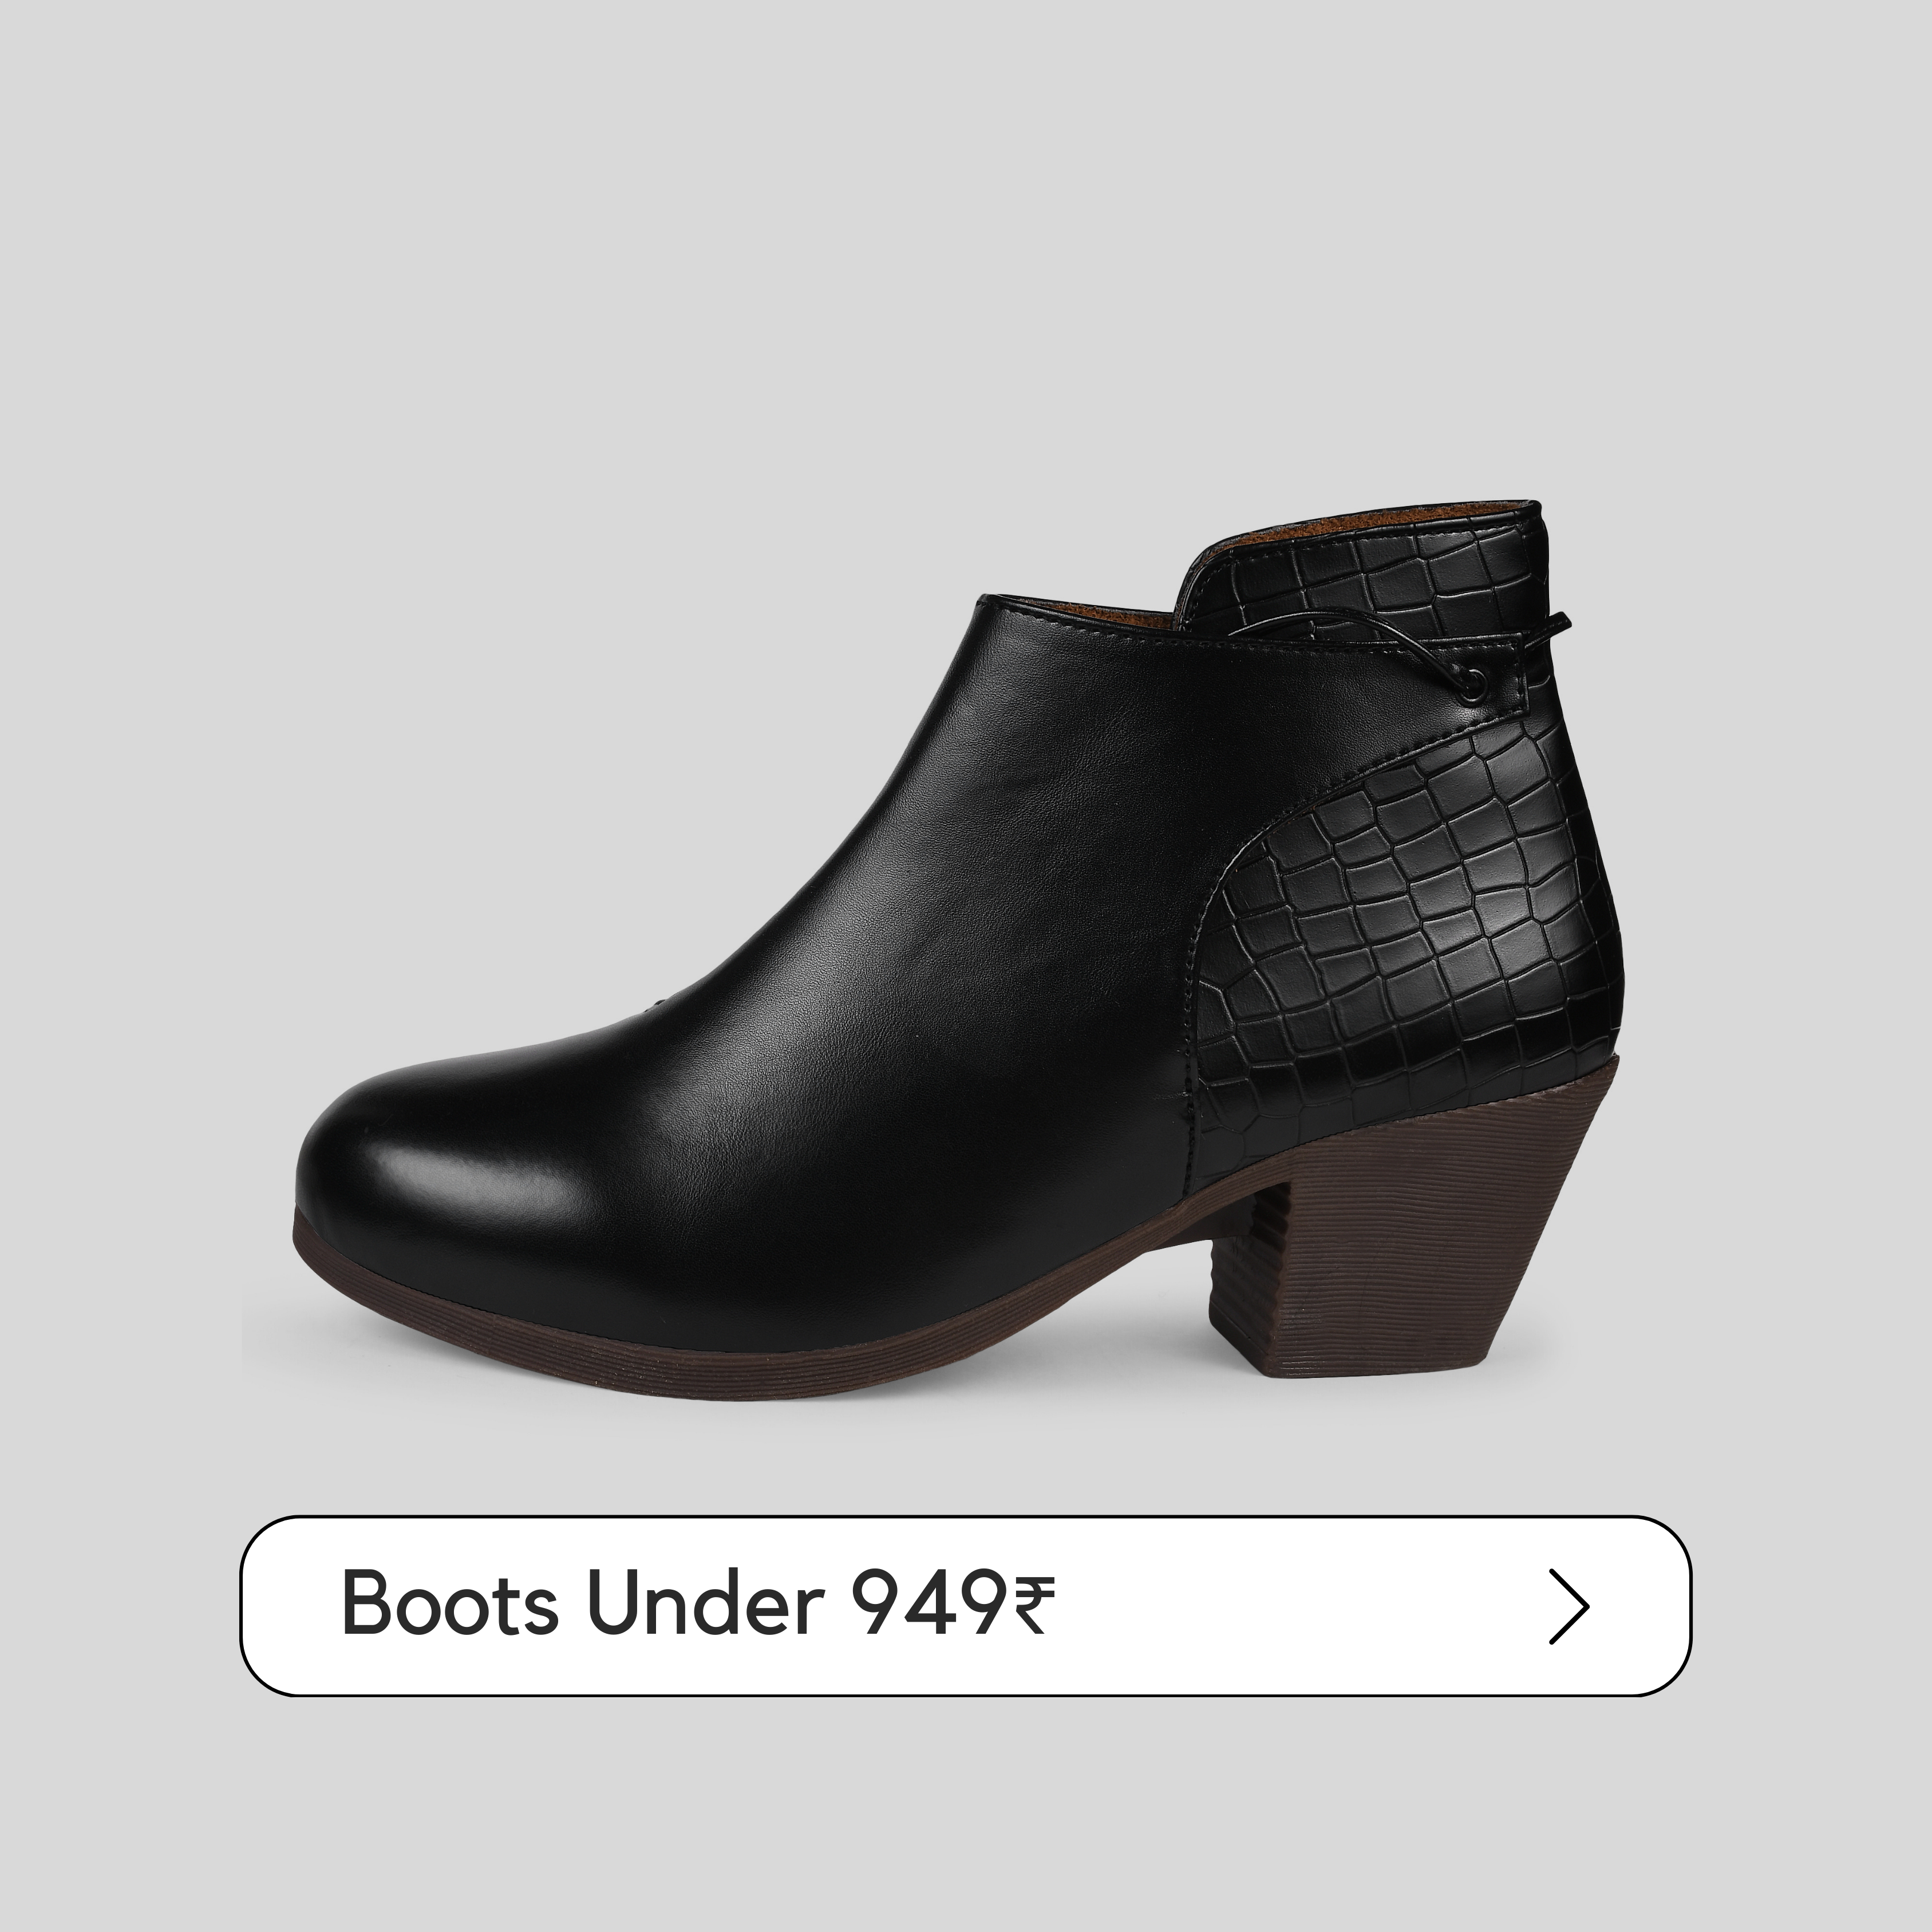 Boots under 749